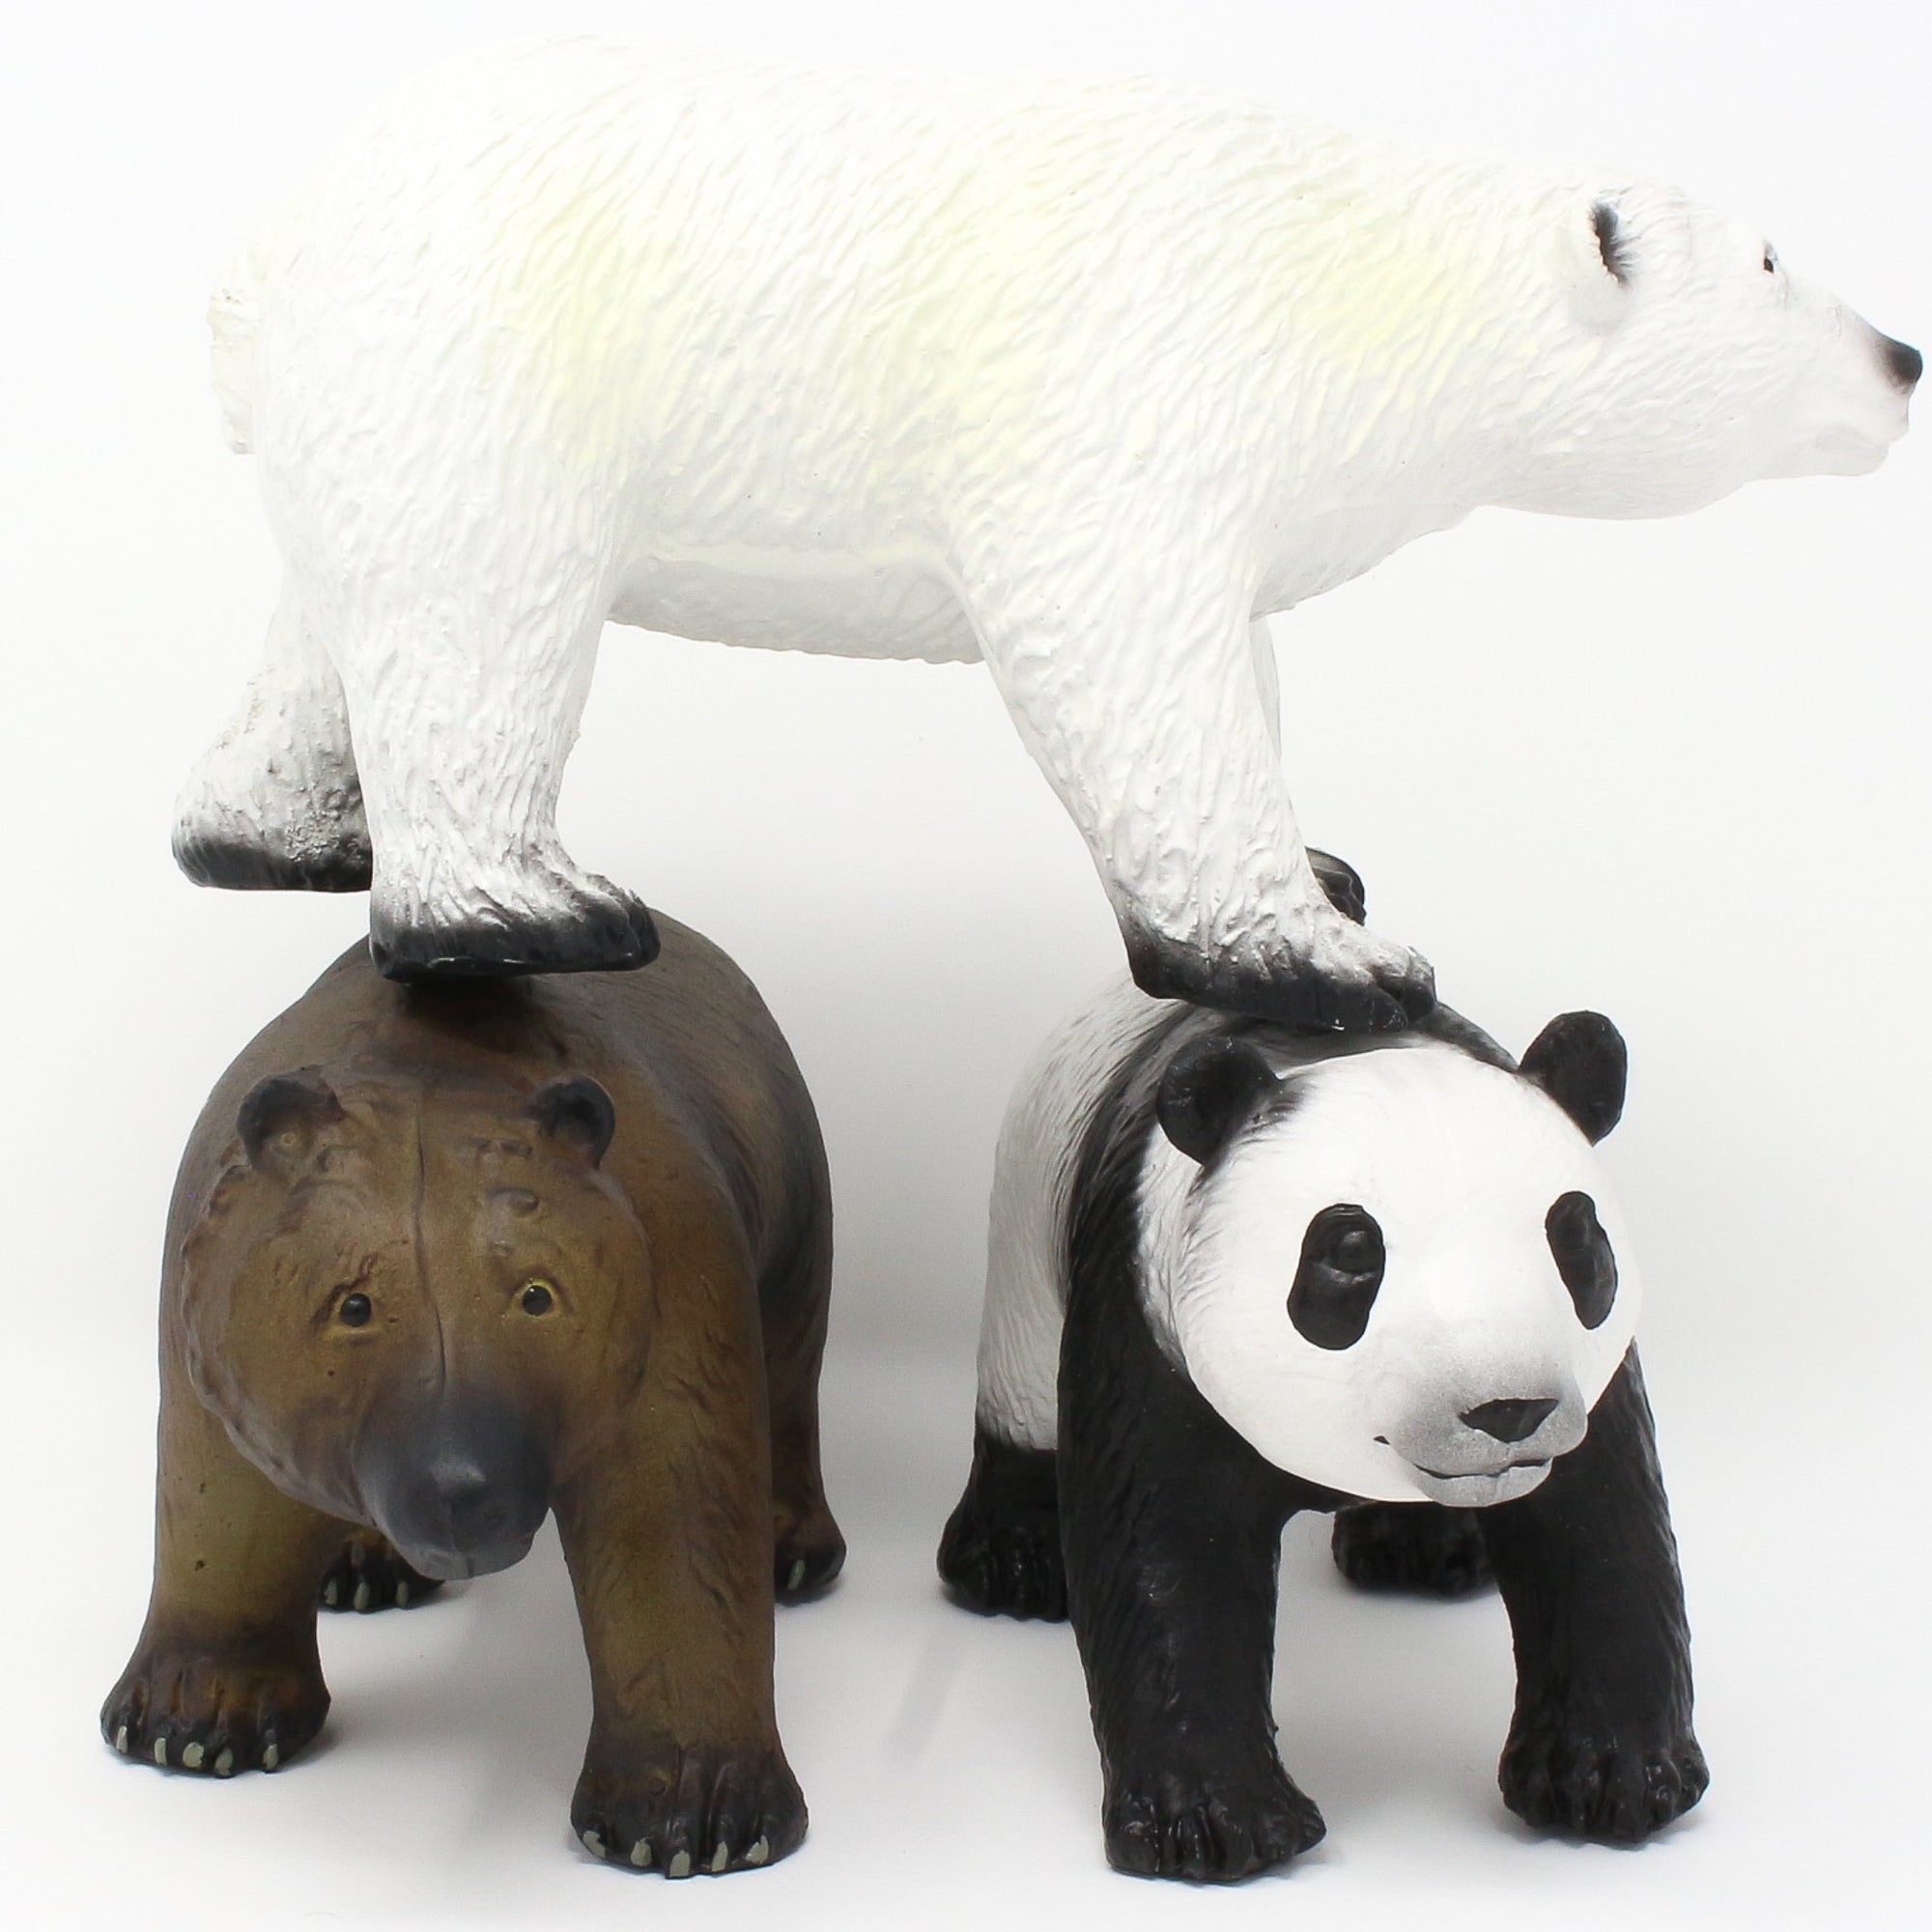 Bears Toys For Kids - Bears 3-Set | Natural Rubber Toys